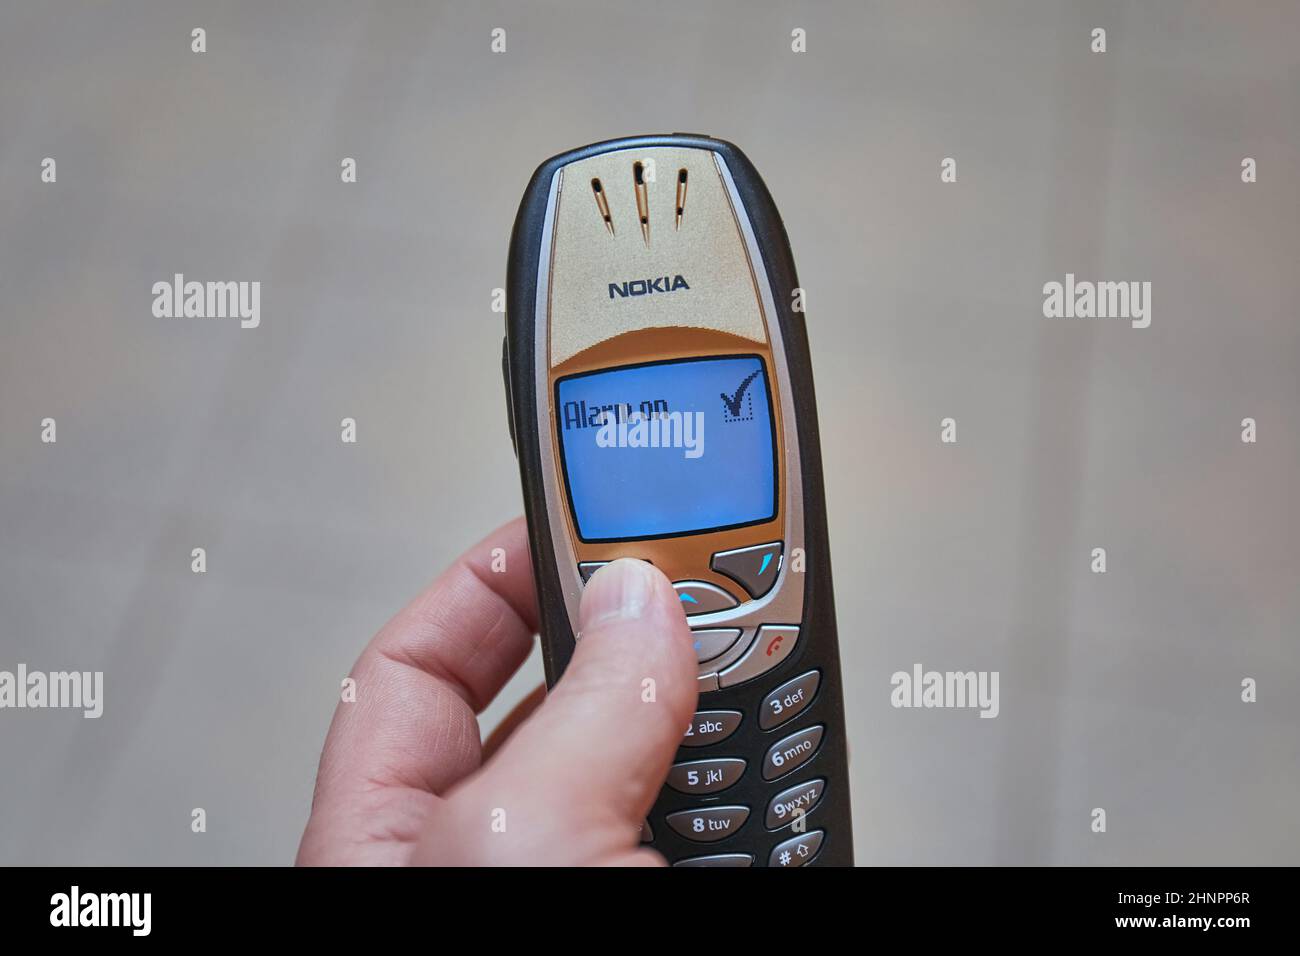 Setting alarm on old cellphone, Nokia 6310i Stock Photo